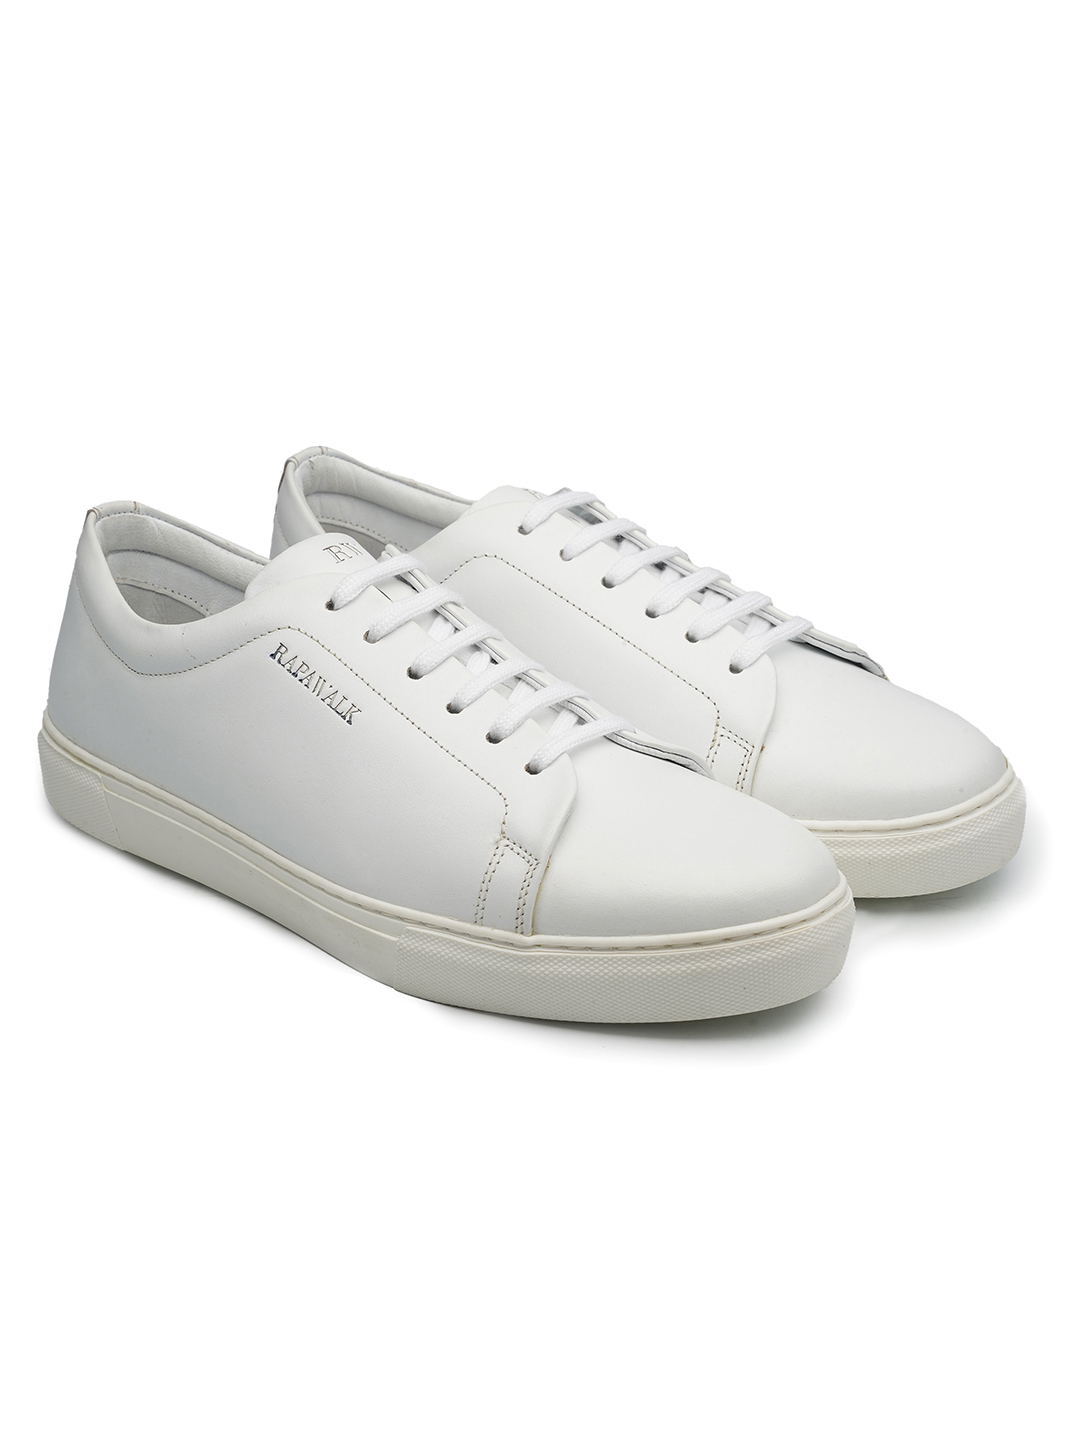 Buy White Sneakers for Men by CROSS WINGS Online | Ajio.com